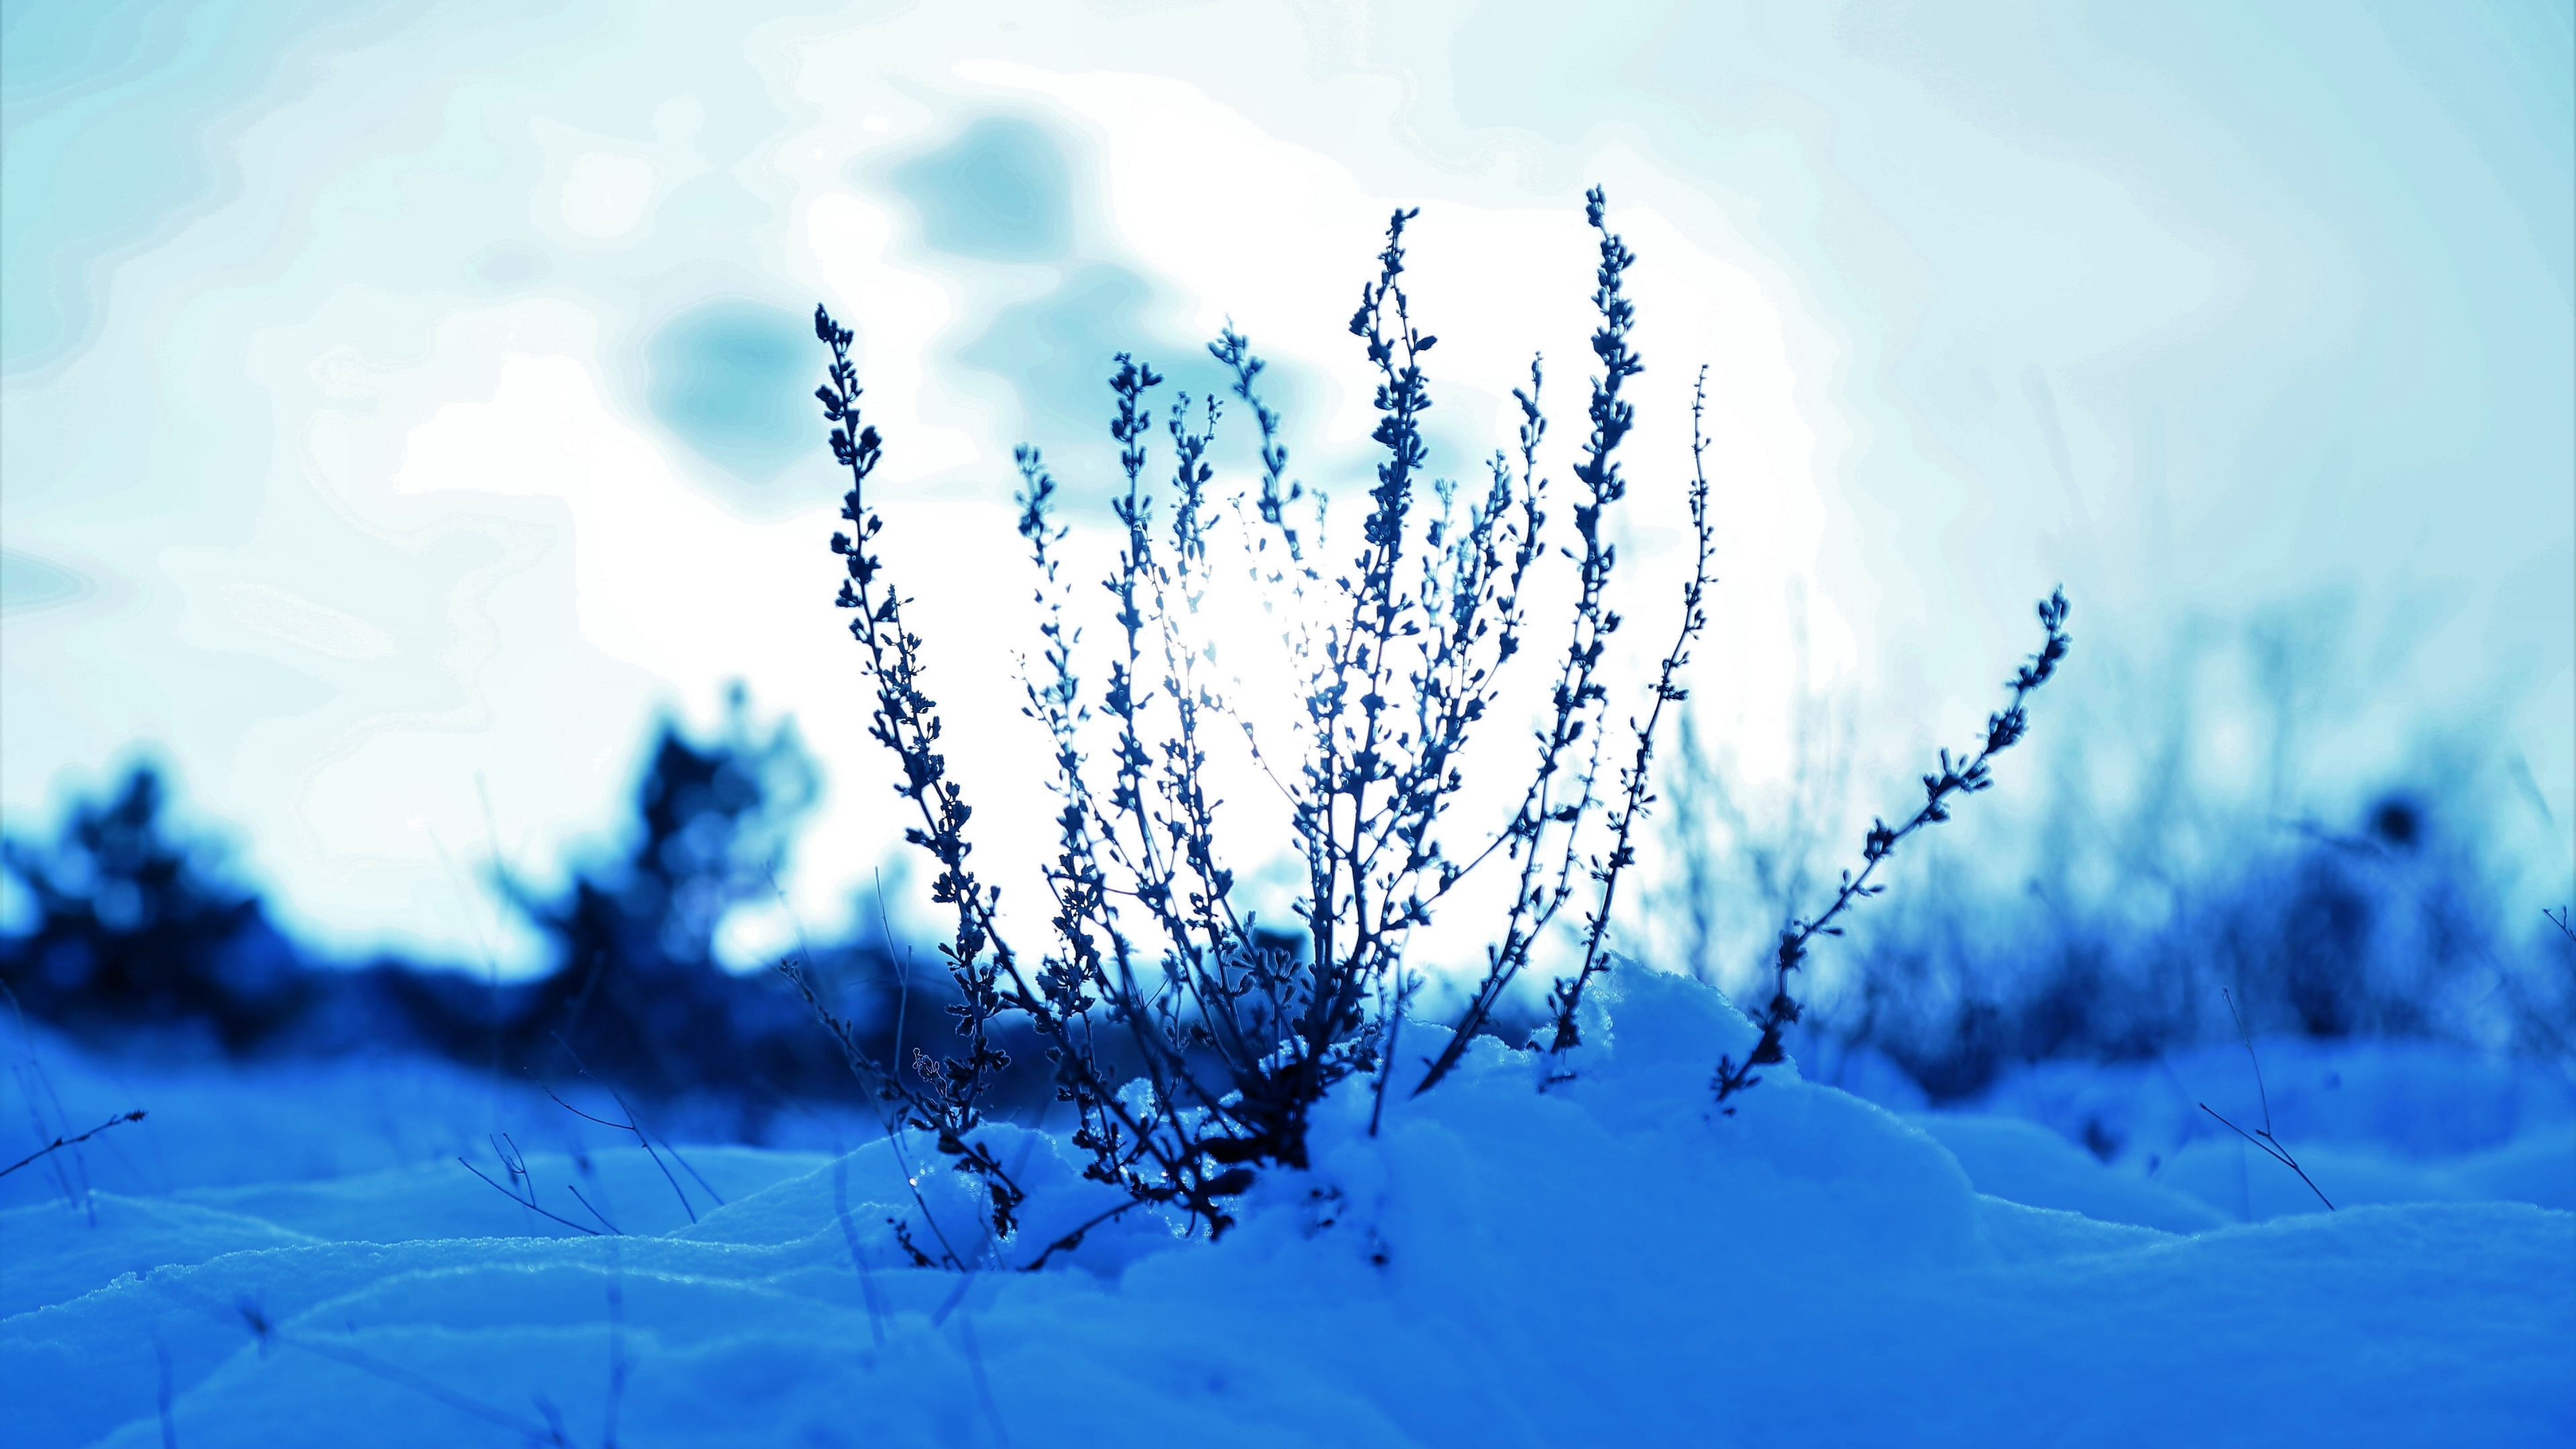 Download 3840x2160 wallpaper snow cover, plants, winter